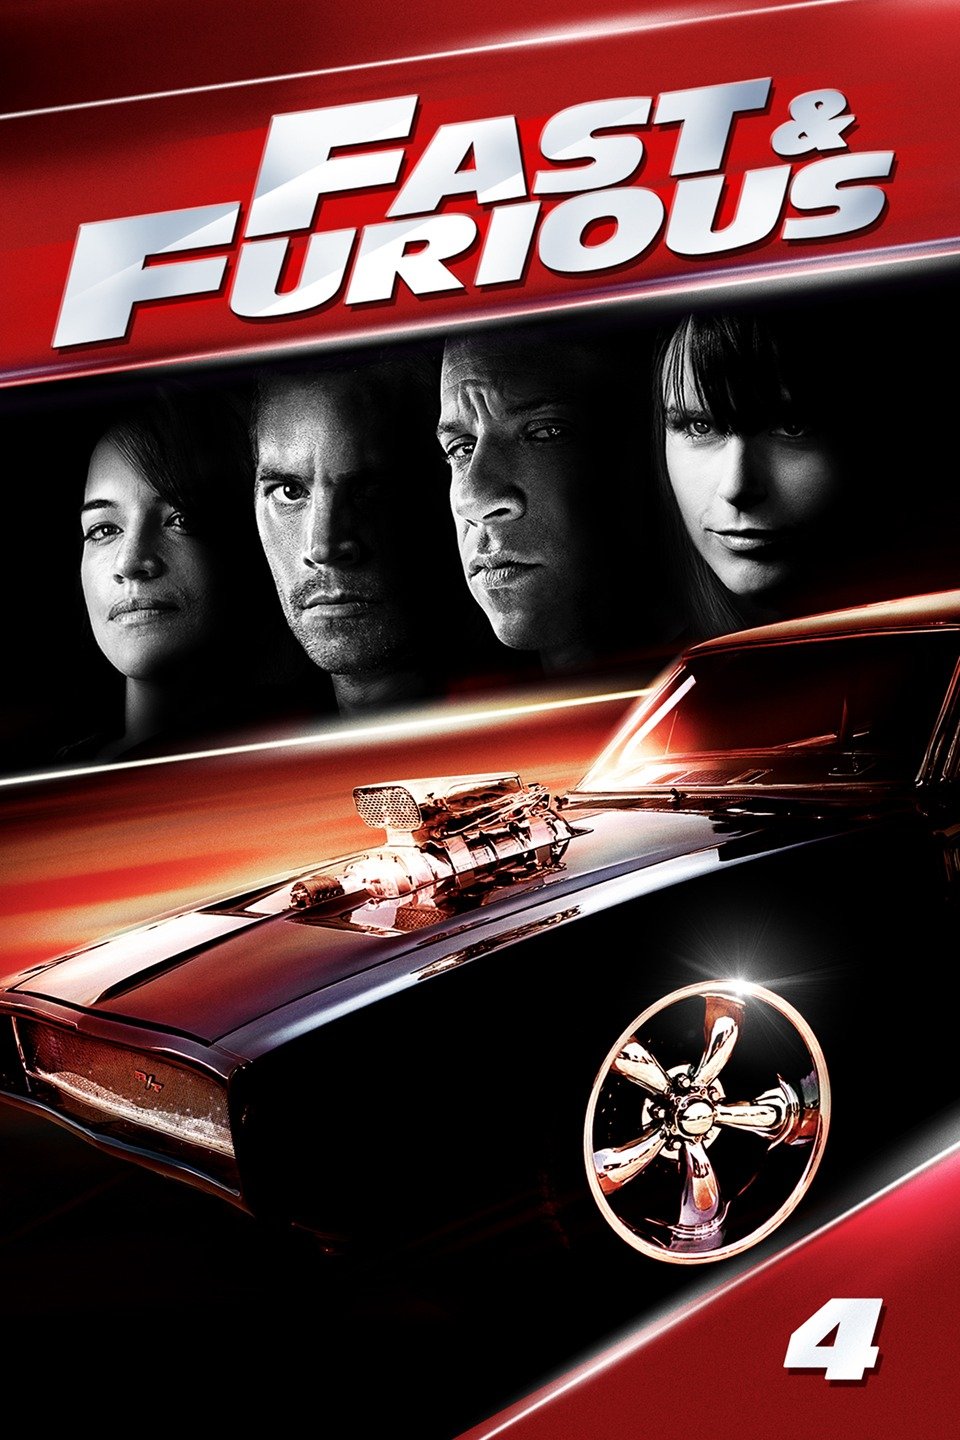 [Mini-HD] Fast & Furious (2009) เร็ว..แรงทะลุนรก 4: ยกทีมซิ่ง แรงทะลุไมล์ ภาค 4 [1080P] [BluRay.DTS.x264] [พากย์ไทย DTS + อังกฤษ DTS] [บรรยายไทย + อังกฤษ] [เสียงไทย + ซับไทย]